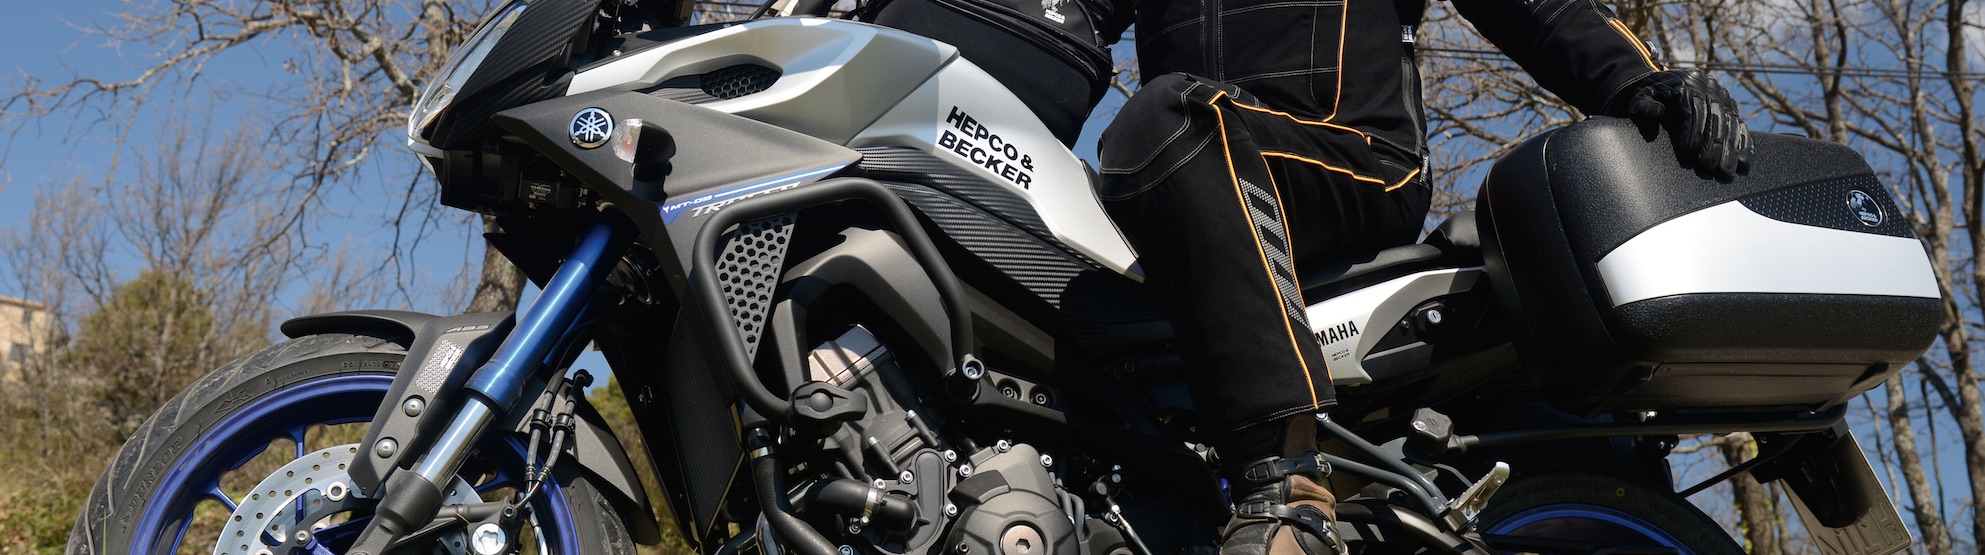 Hepco & Becker crash protection, Junior Flash luggage on more on Yamaha's MT07